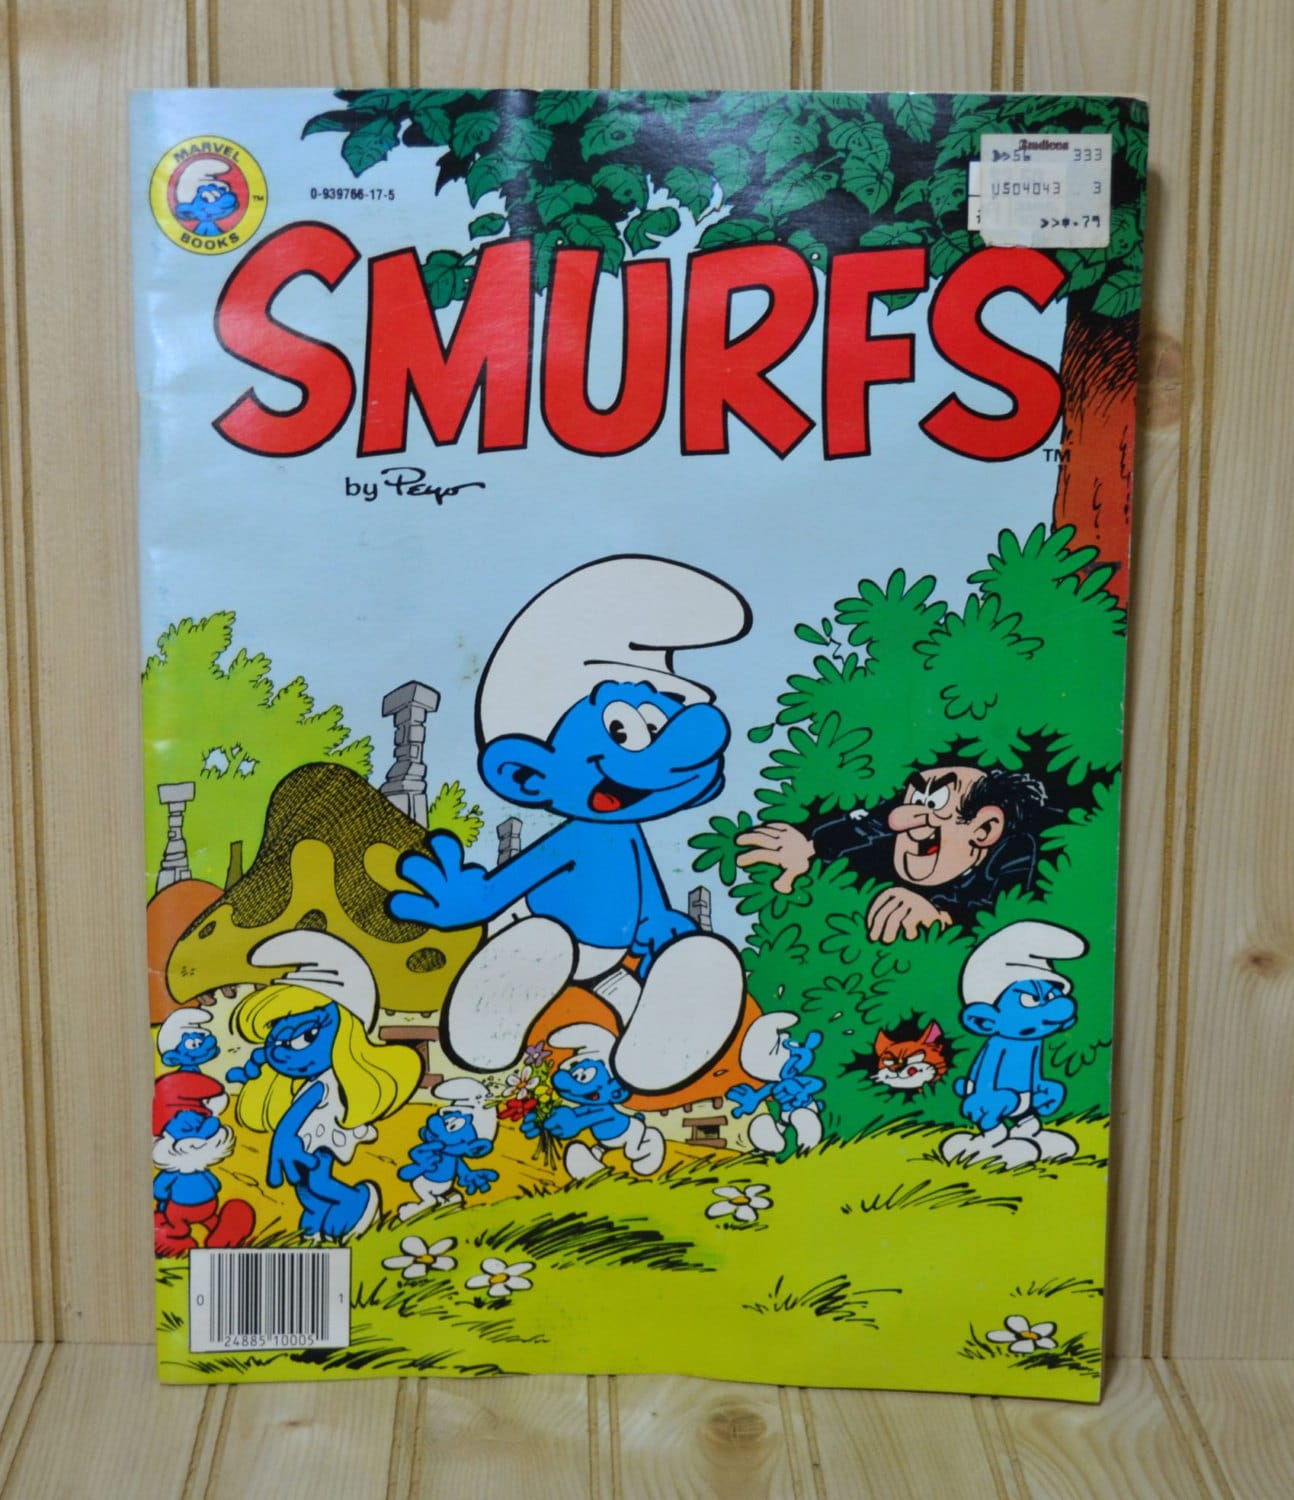 3 Older SMURFS BOOKS COMICS Hardbound and Softbound Smurf Soup -   Portugal